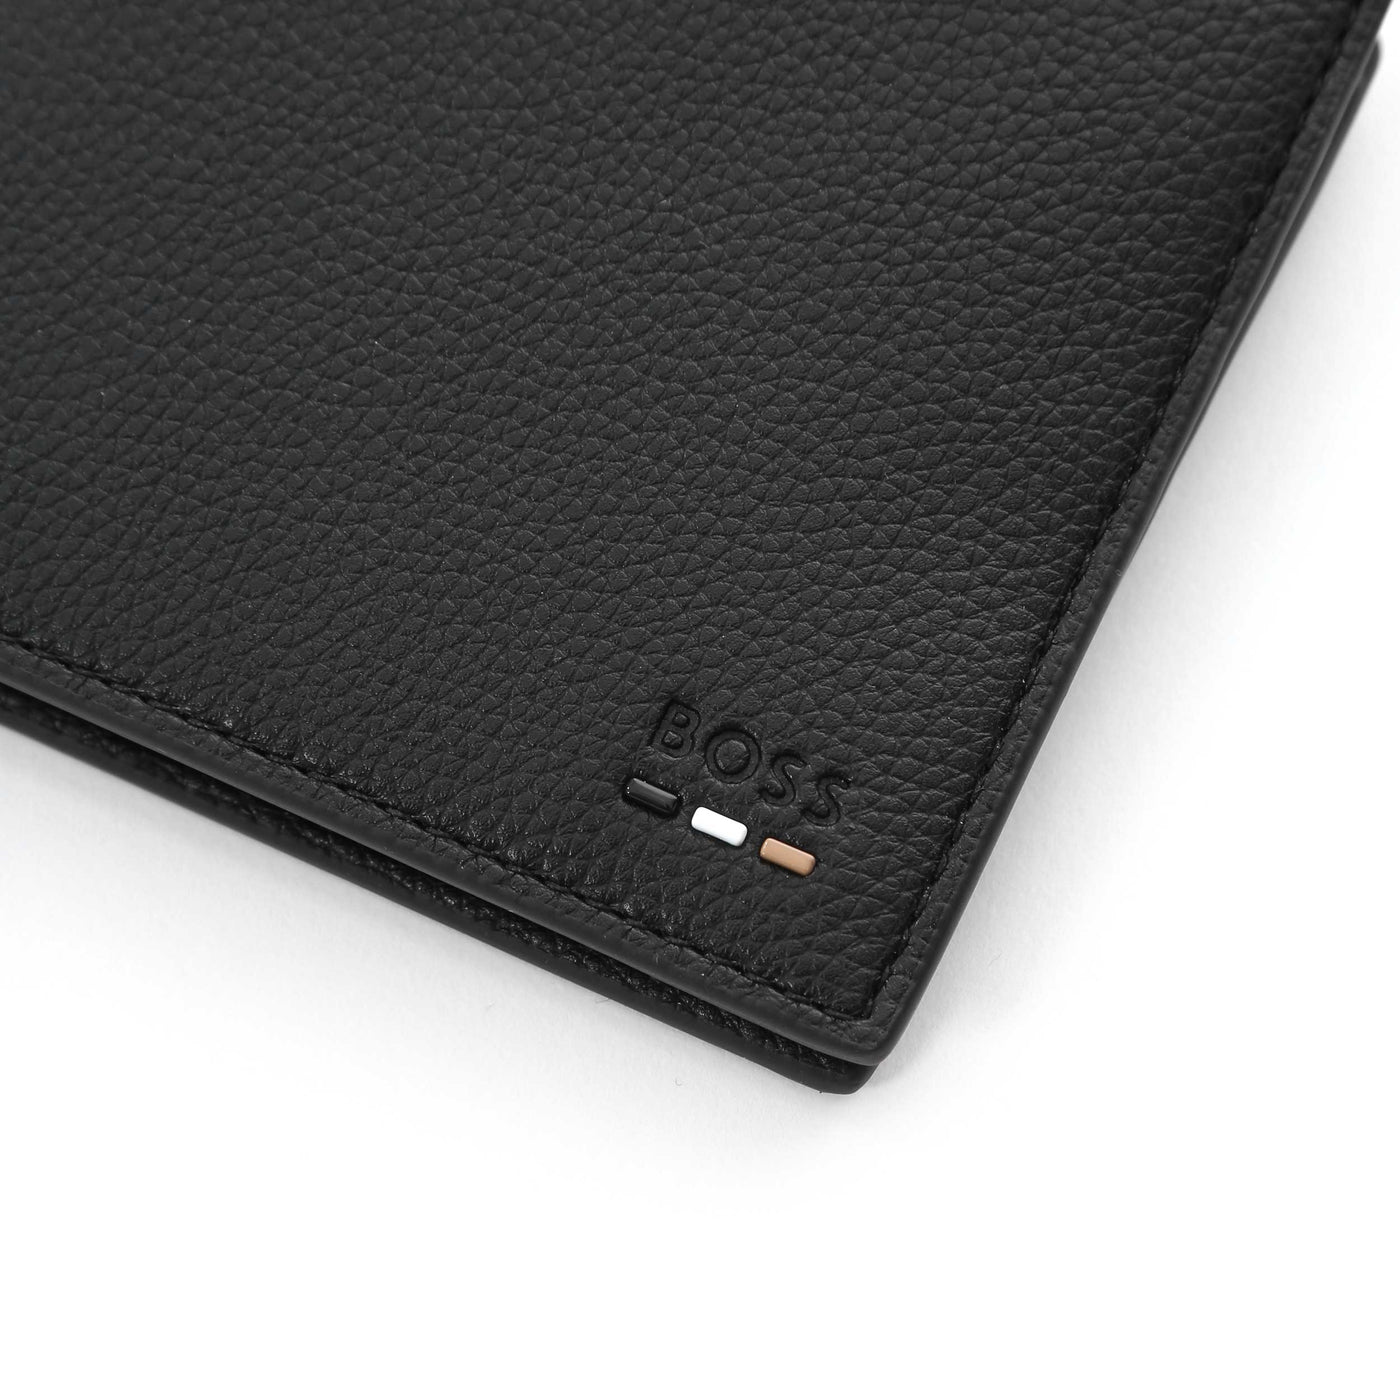 BOSS Ray_8 cc Wallet in Black Logo